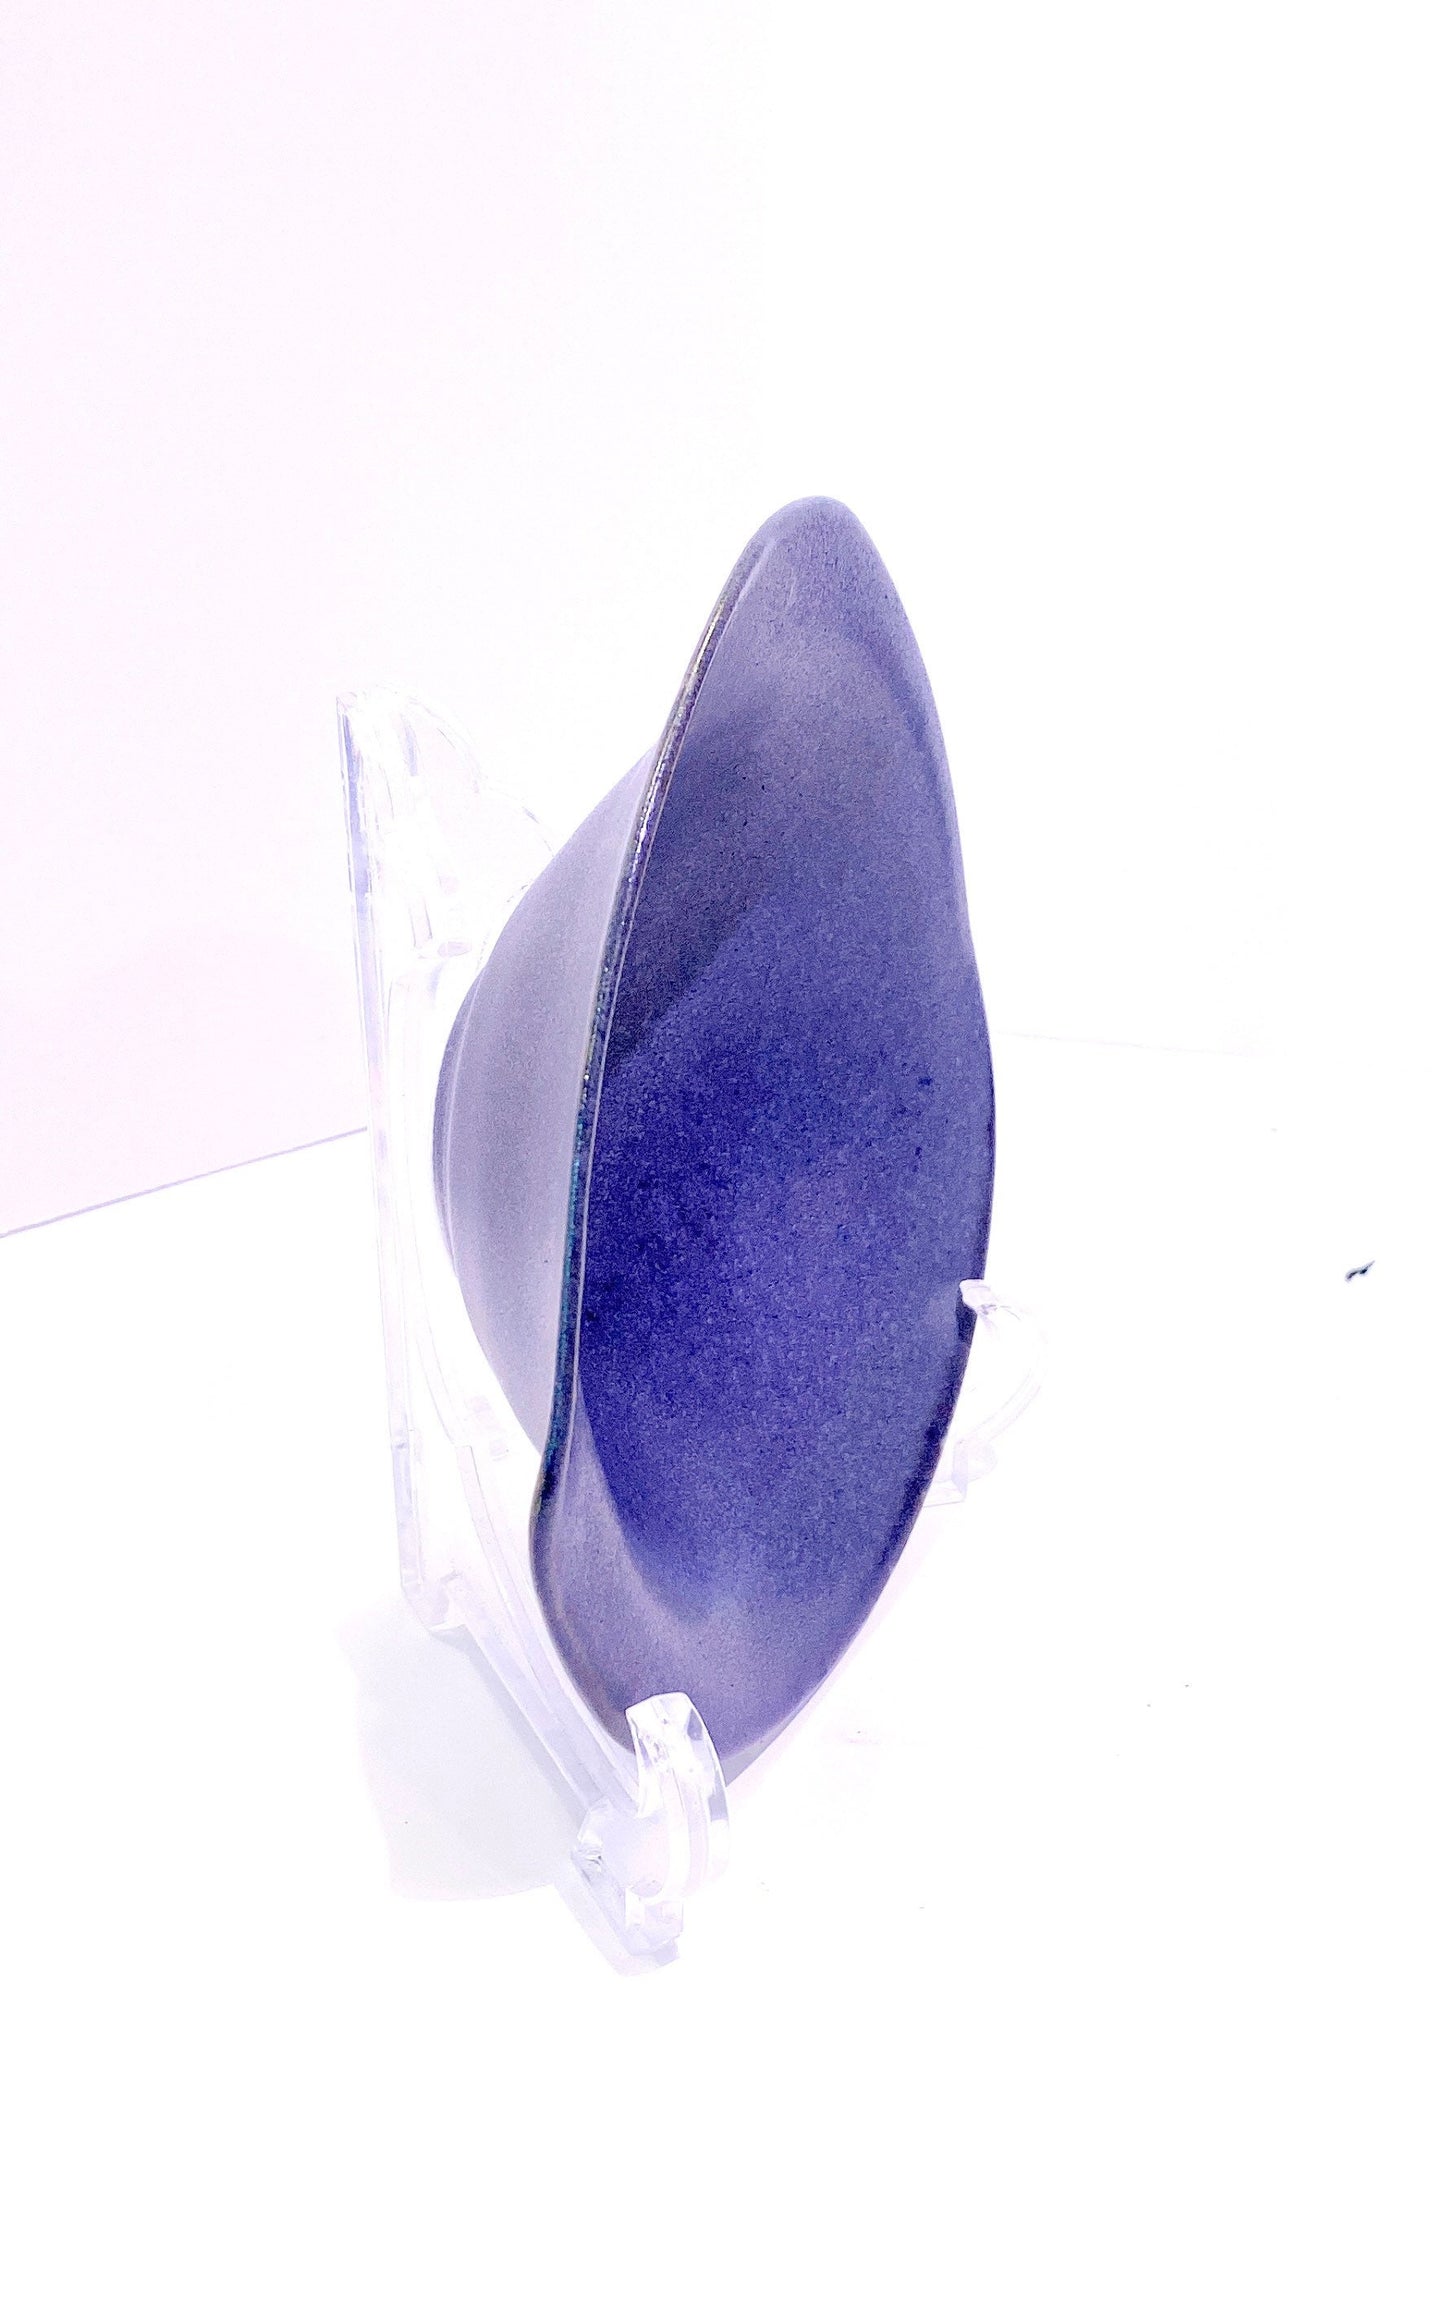 Unique stylish shape gray ceramic wafu-Japanese style medium saucer, 7" x 2" deep